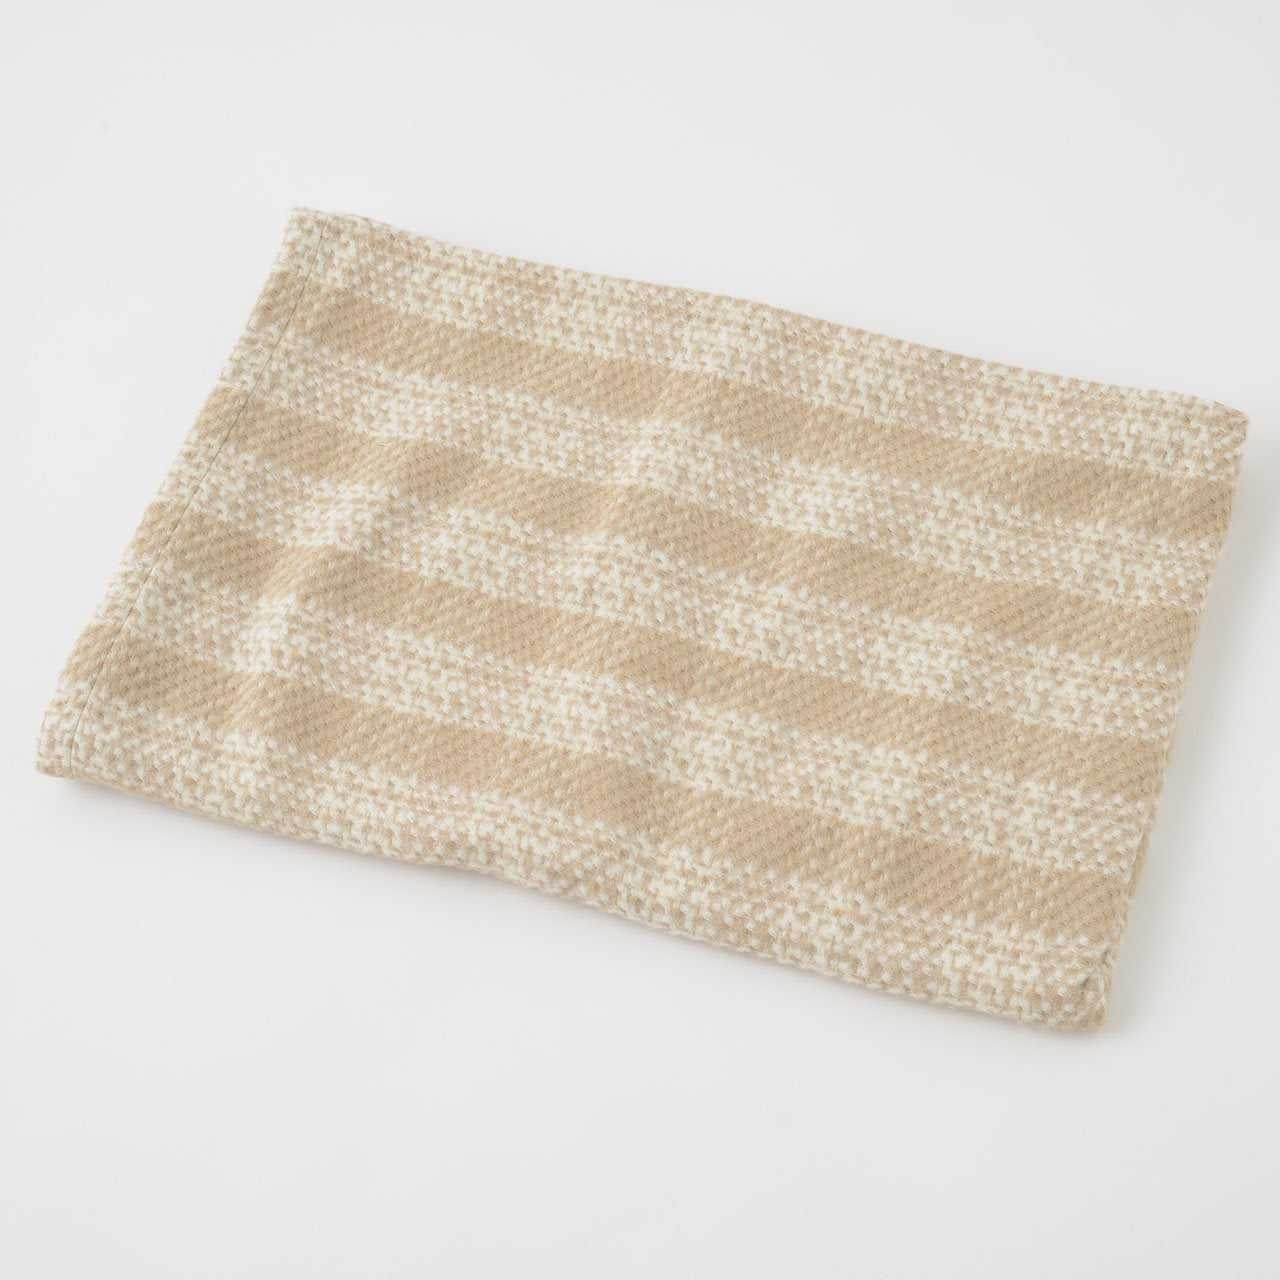 Japanese Organic Cotton Quarter-size Blanket (check weave)